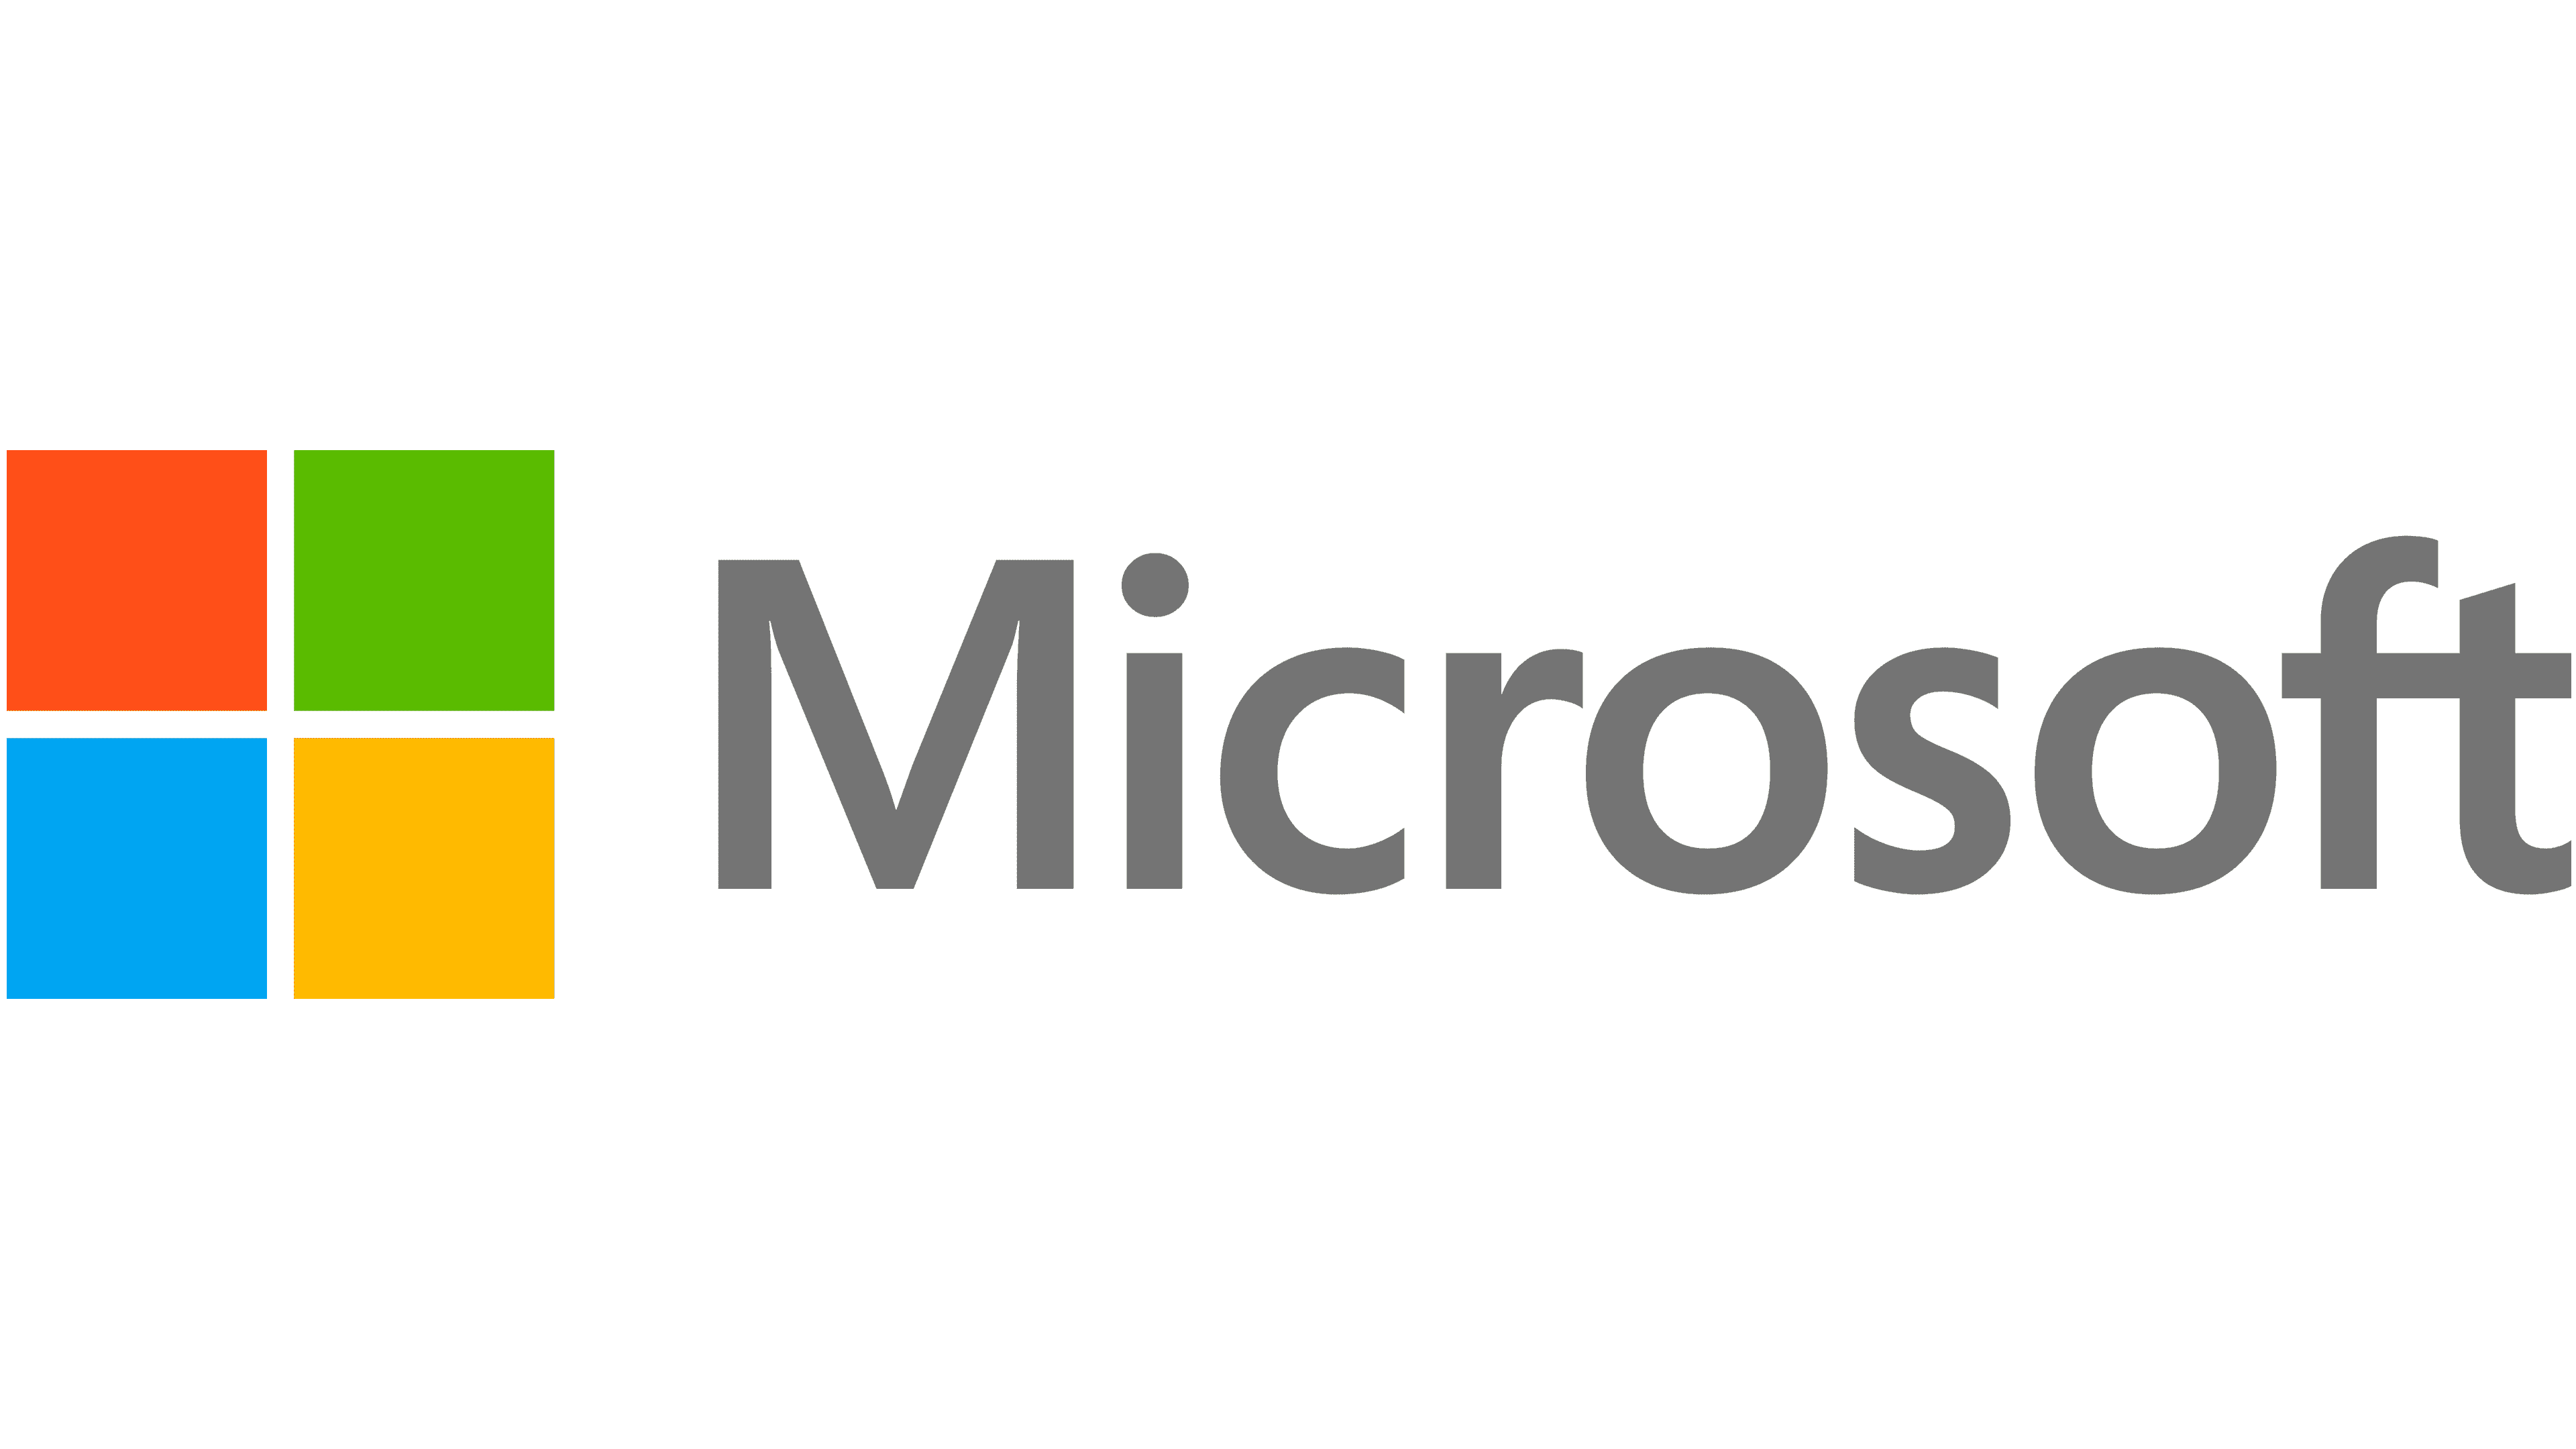 Microsoft-Logo-1